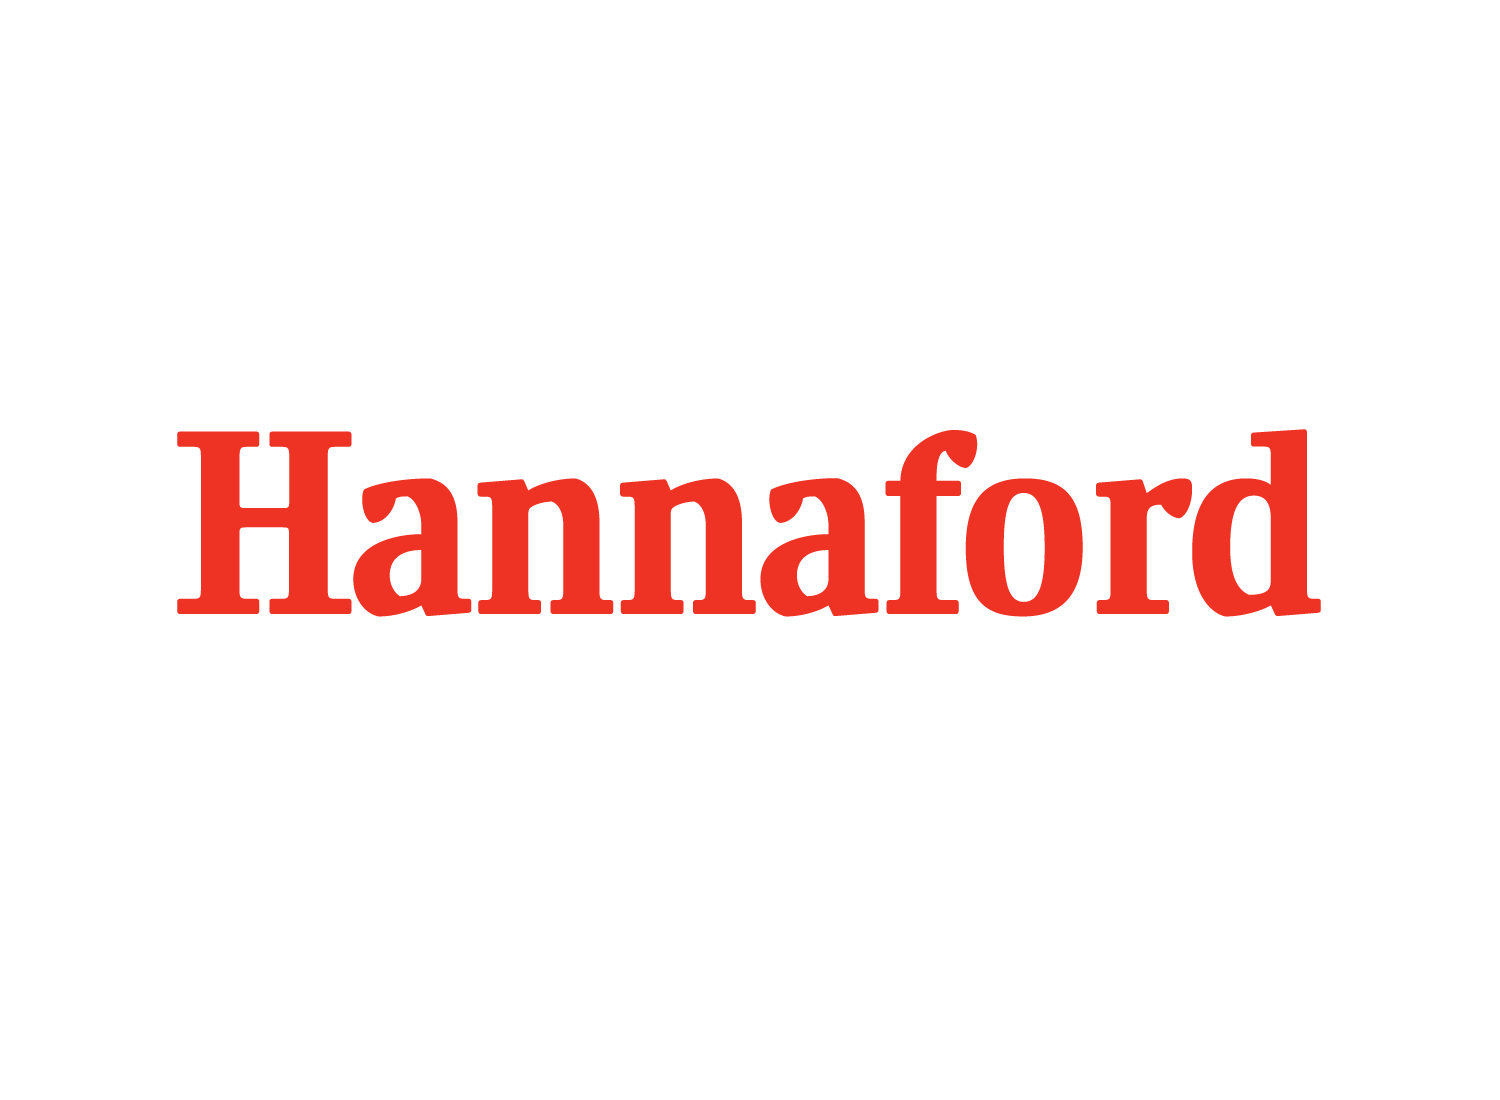 Hannaford wordmark